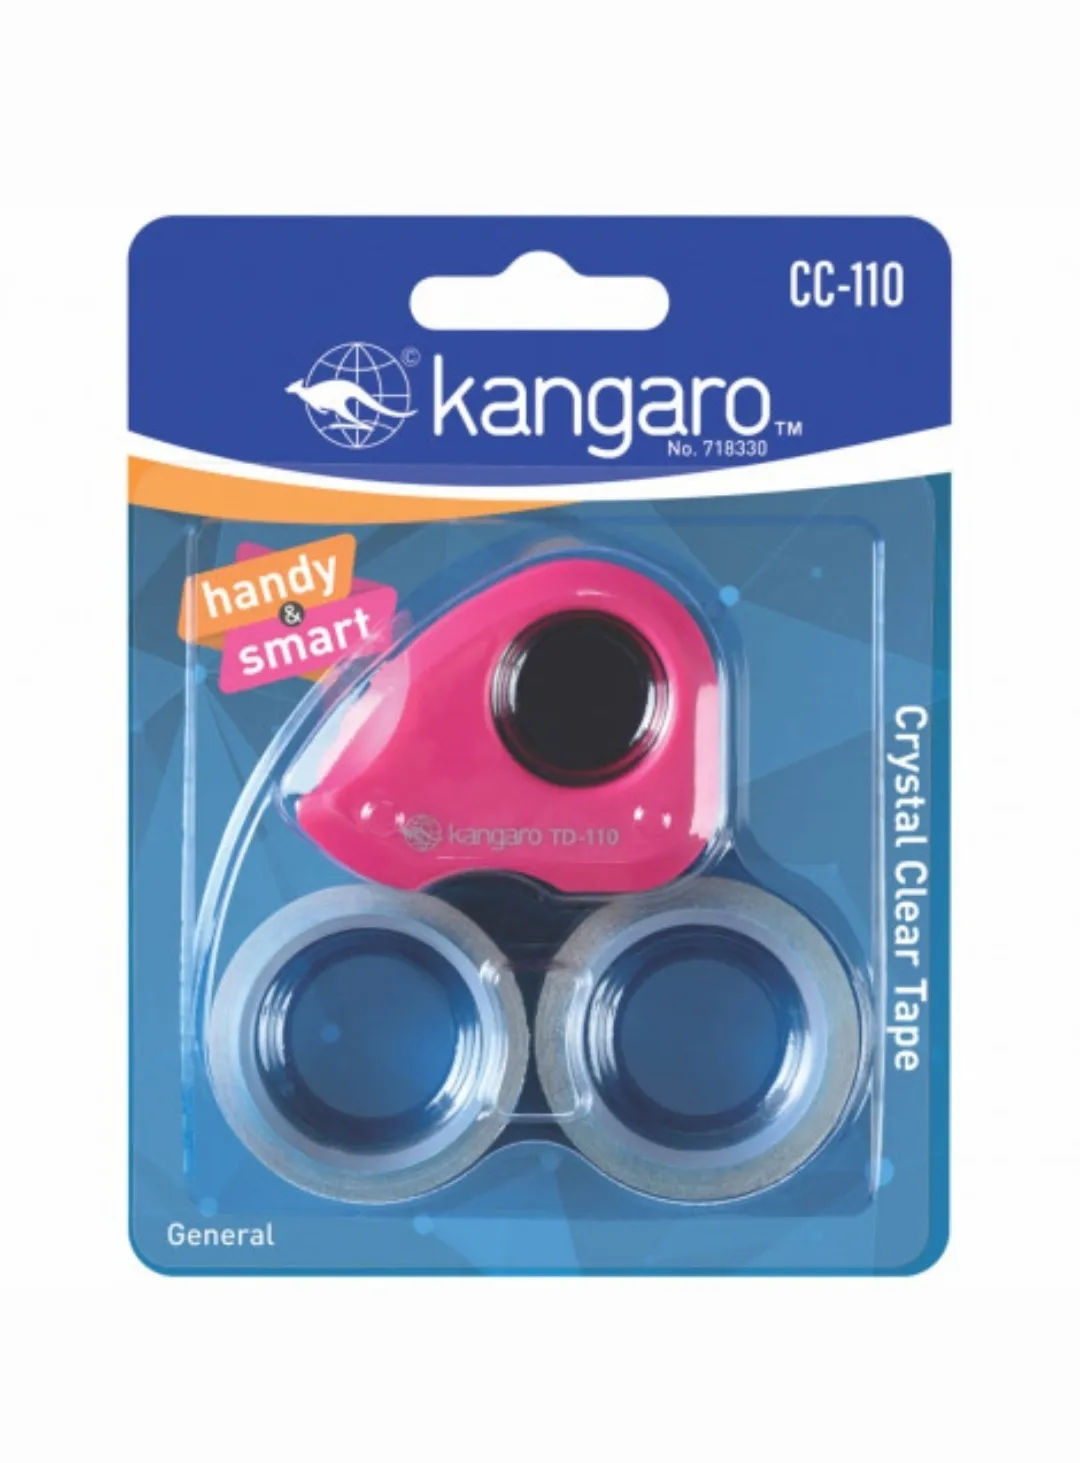 Kangaro Tape Dispenser CC- 110 Handy & Smart Pack of 1